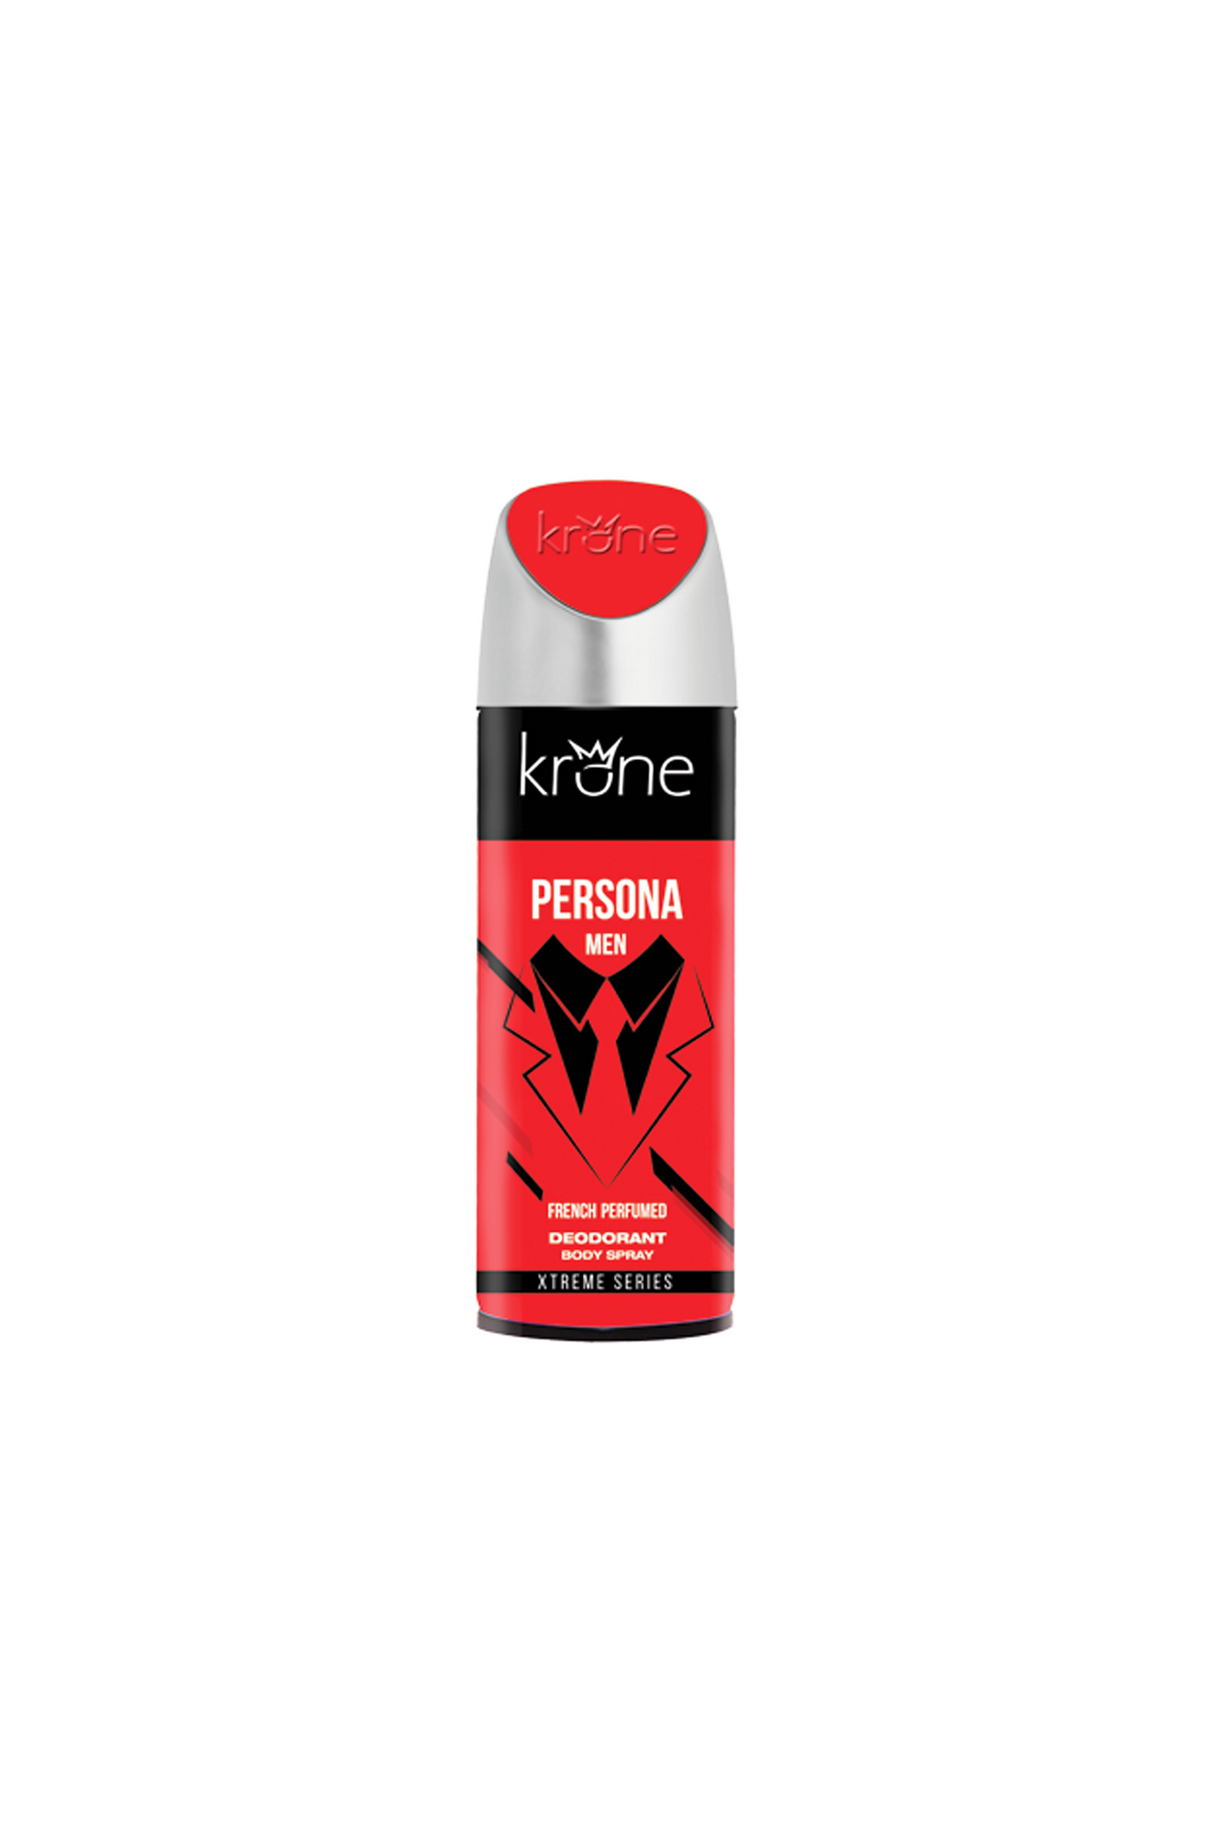 krone persona deodorant body spray 200ml for men